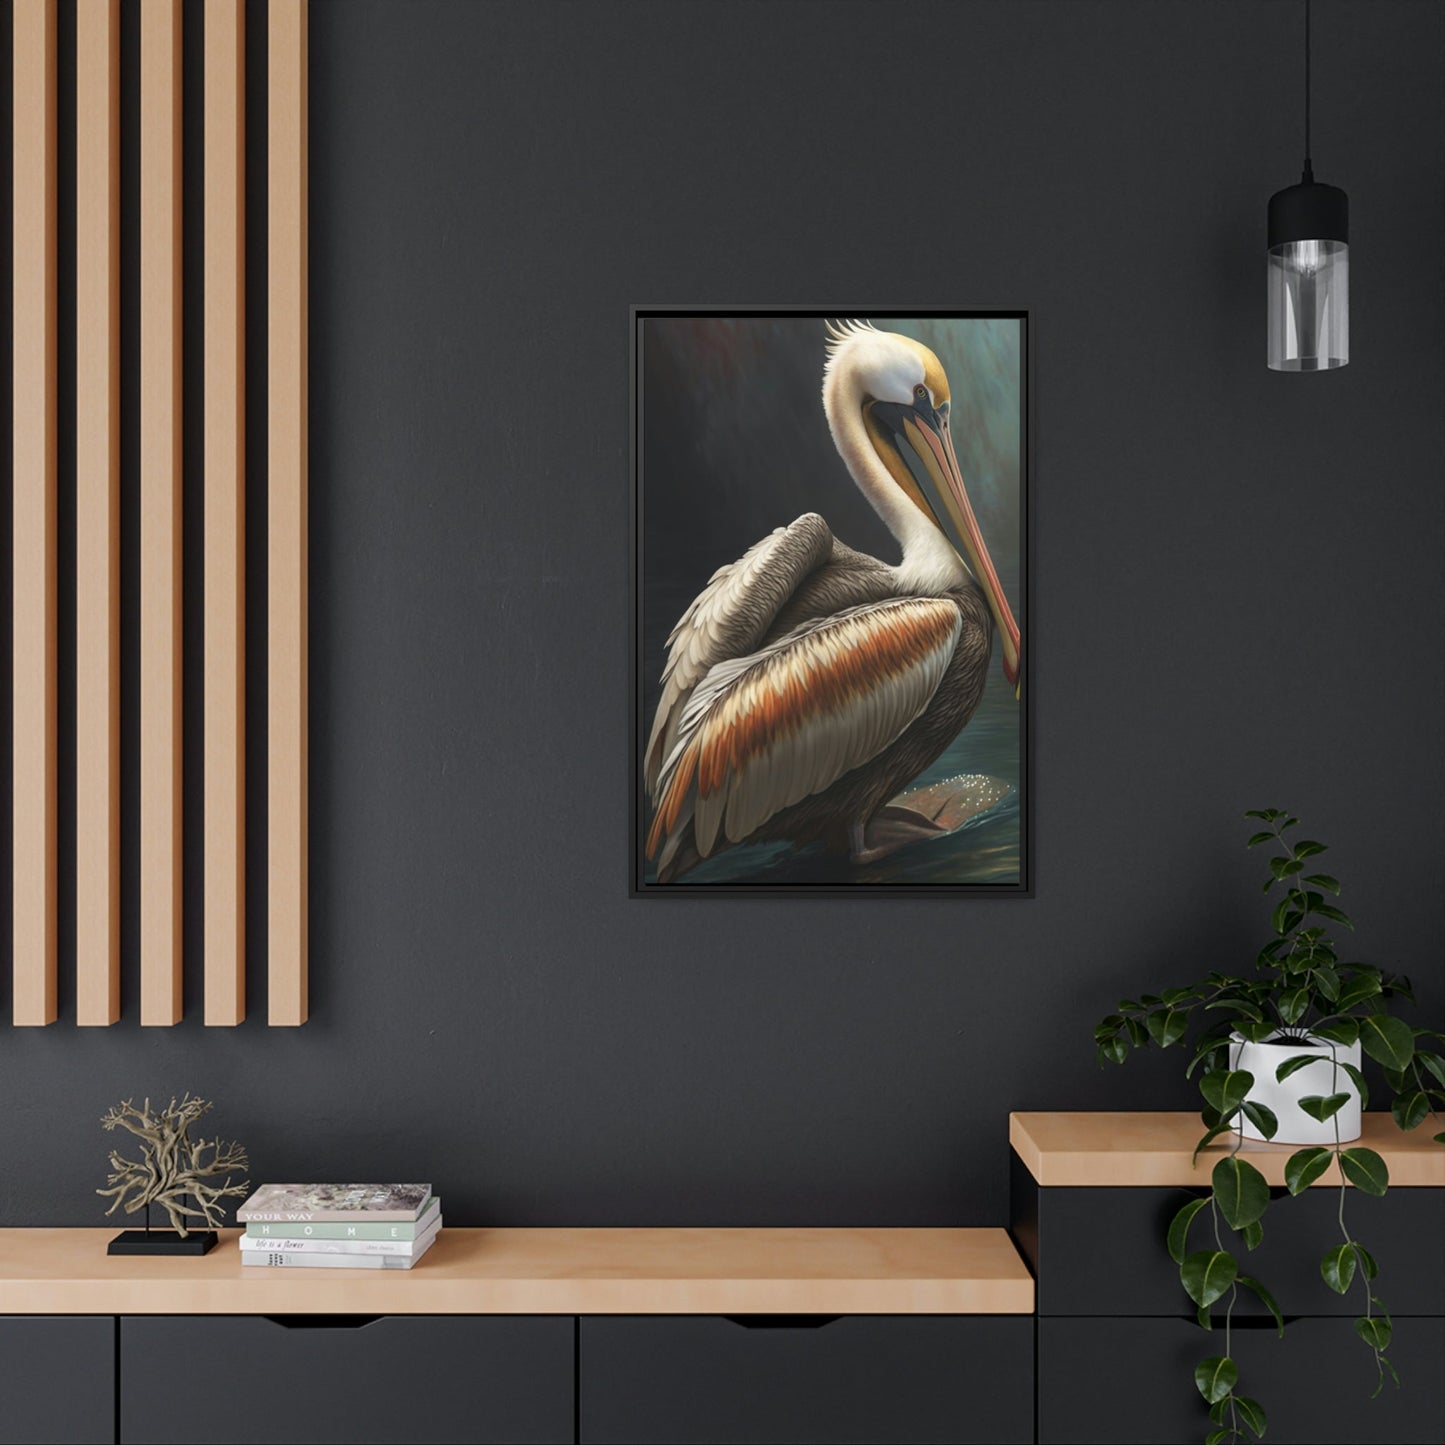 Pelican Portrait: An Artistic Canvas Showcase